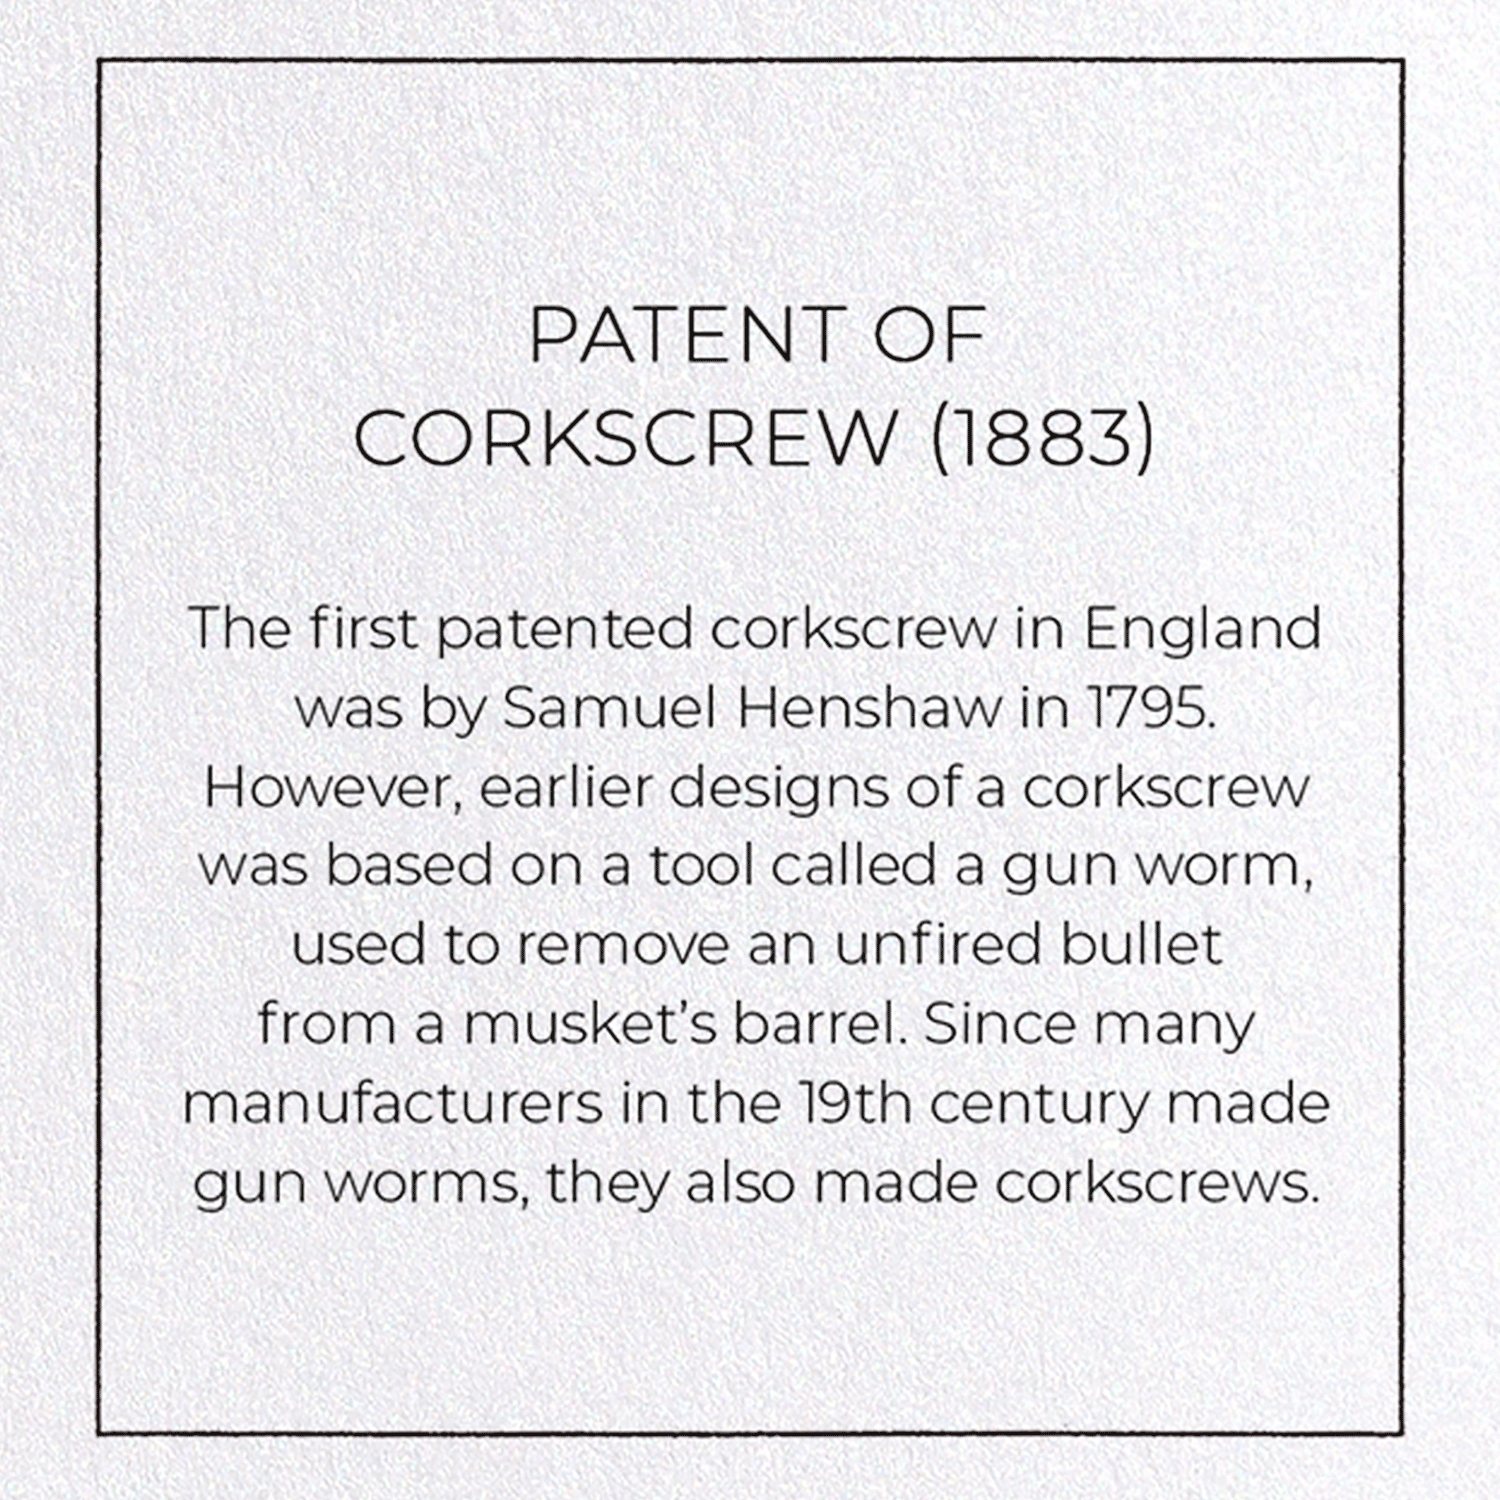 PATENT OF CORKSCREW (1883)